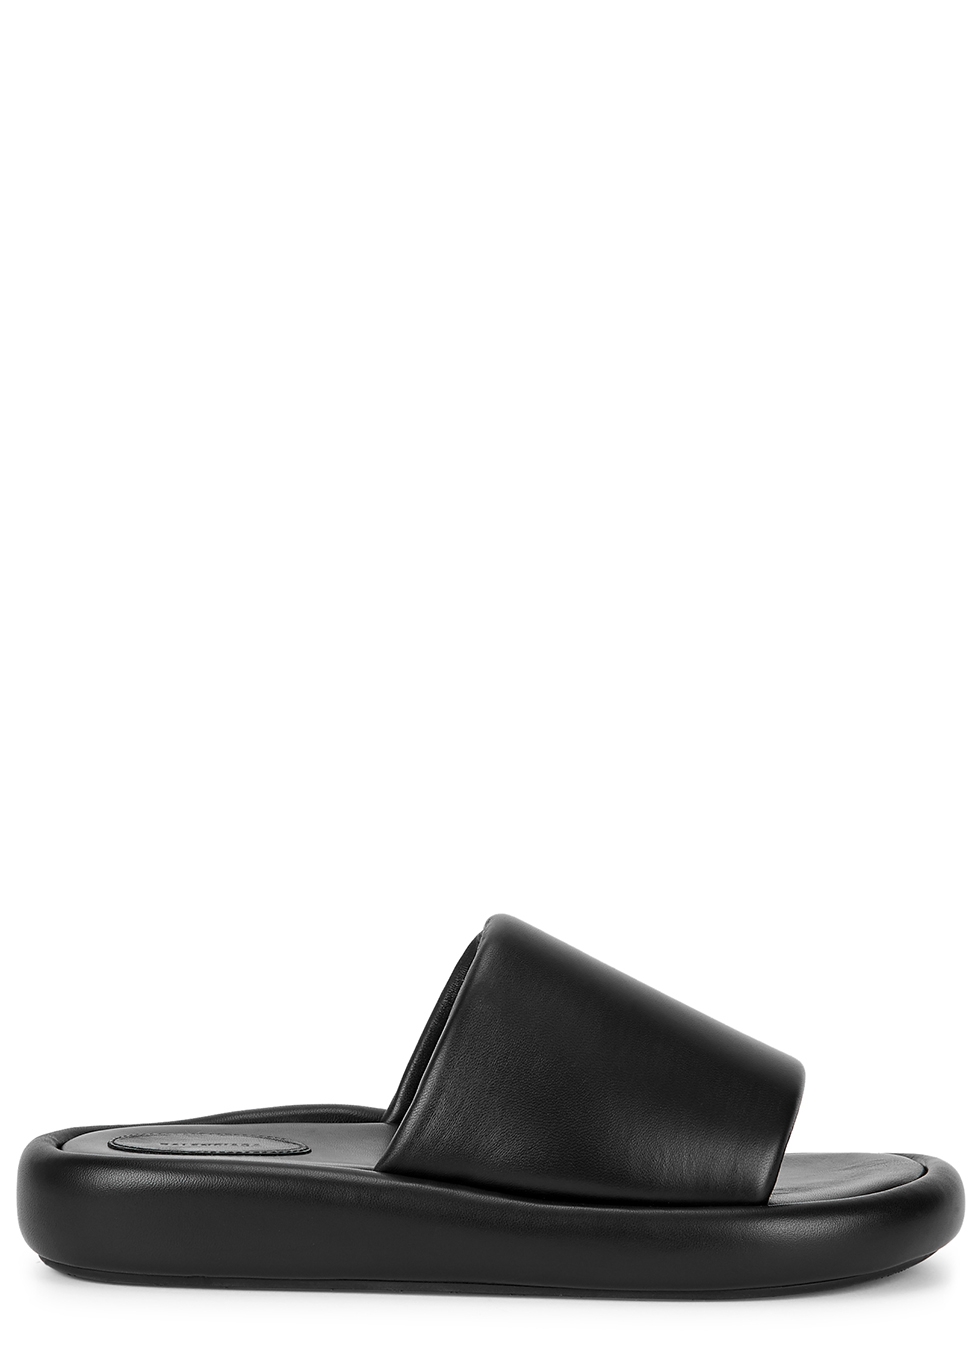 Balenciaga Market black padded leather sliders - Harvey Nichols